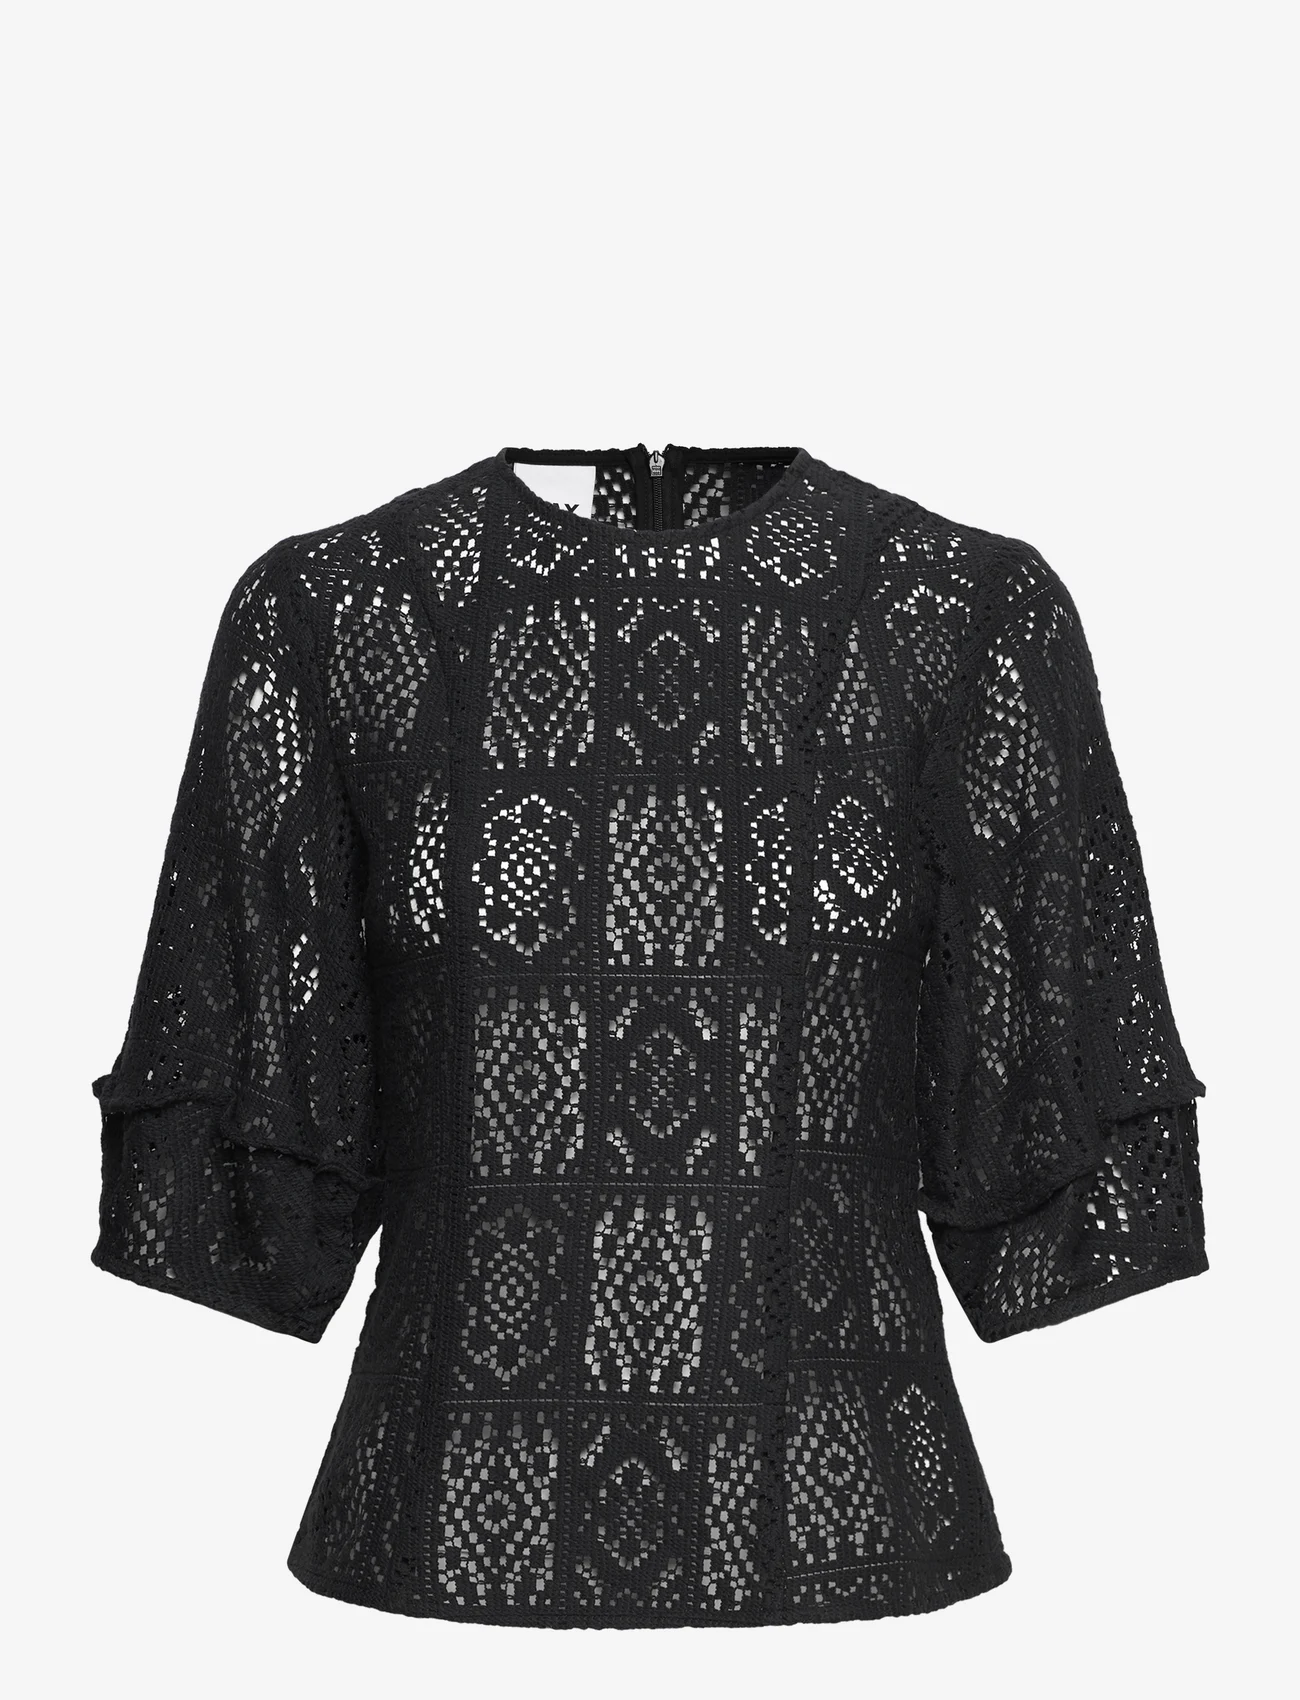 Day Birger et Mikkelsen - Cordelia - Cotton Crochet Lace - short-sleeved blouses - black - 0